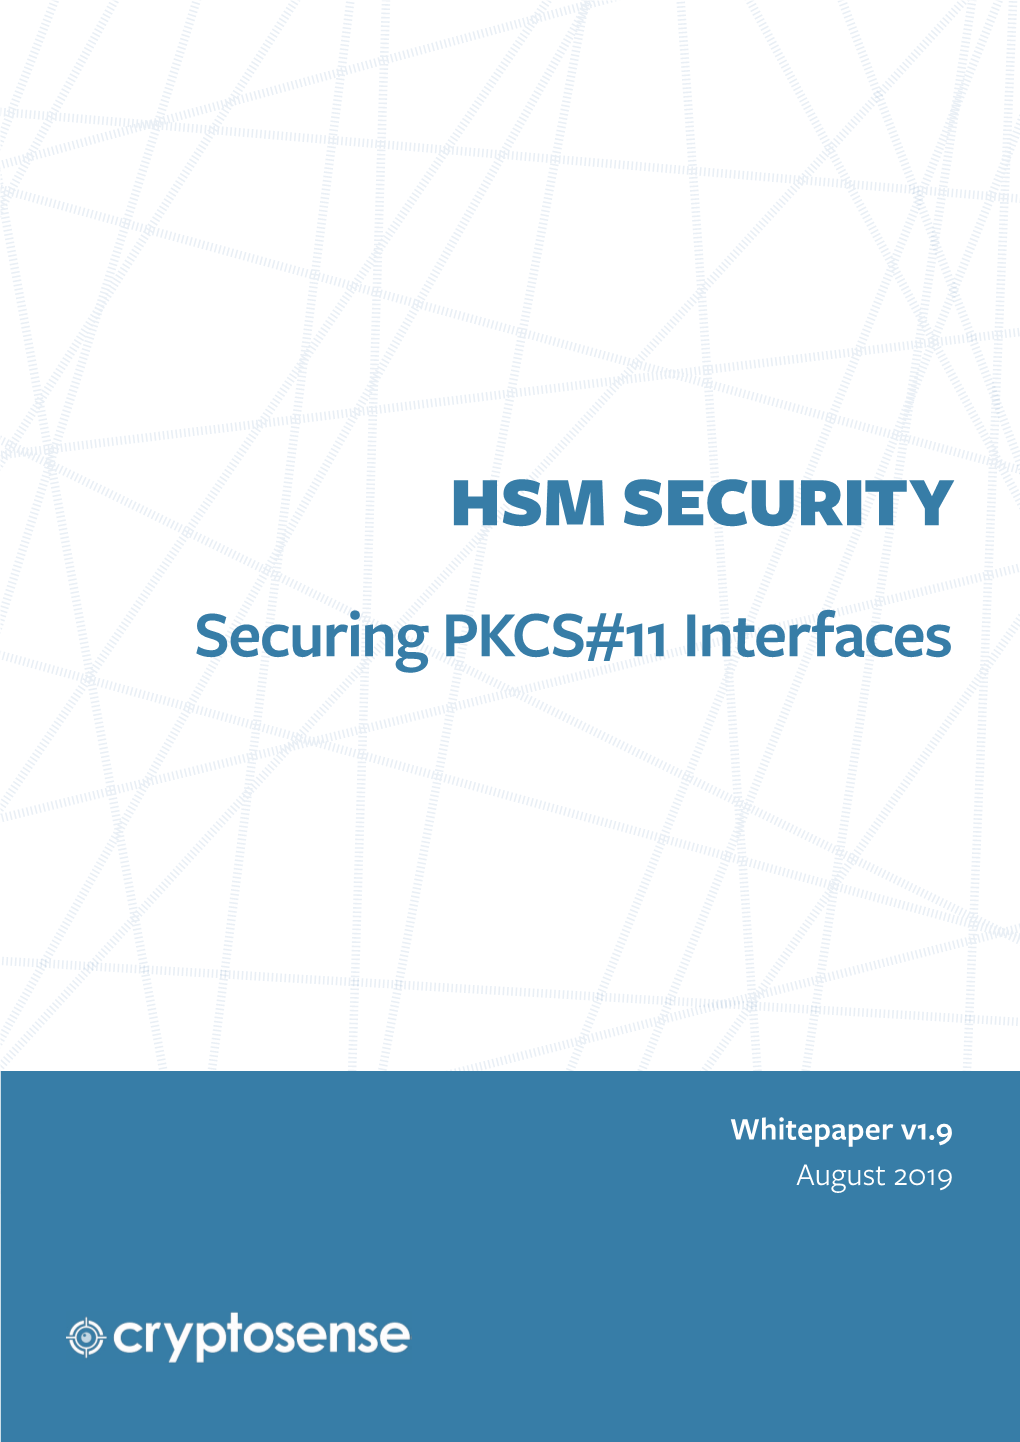 HSM SECURITY Securing PKCS#11 Interfaces